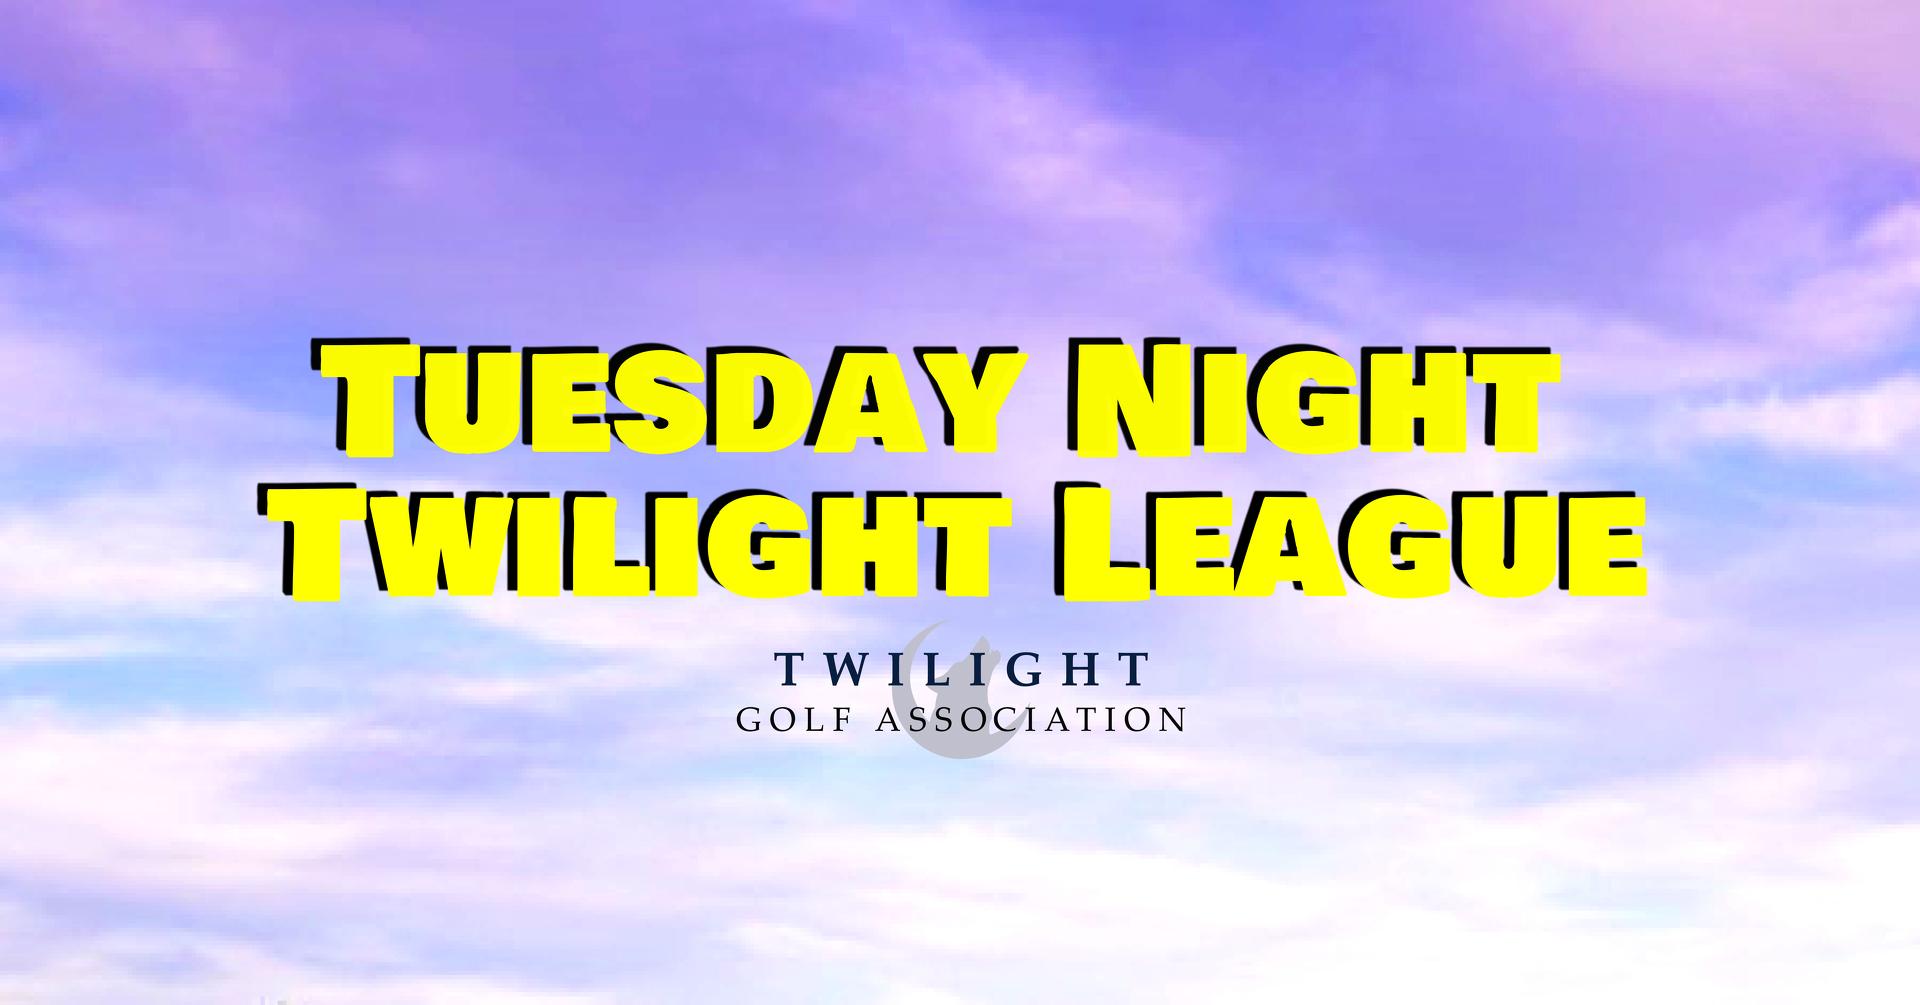 Tuesday Twilight League at Silverhorn Golf Club